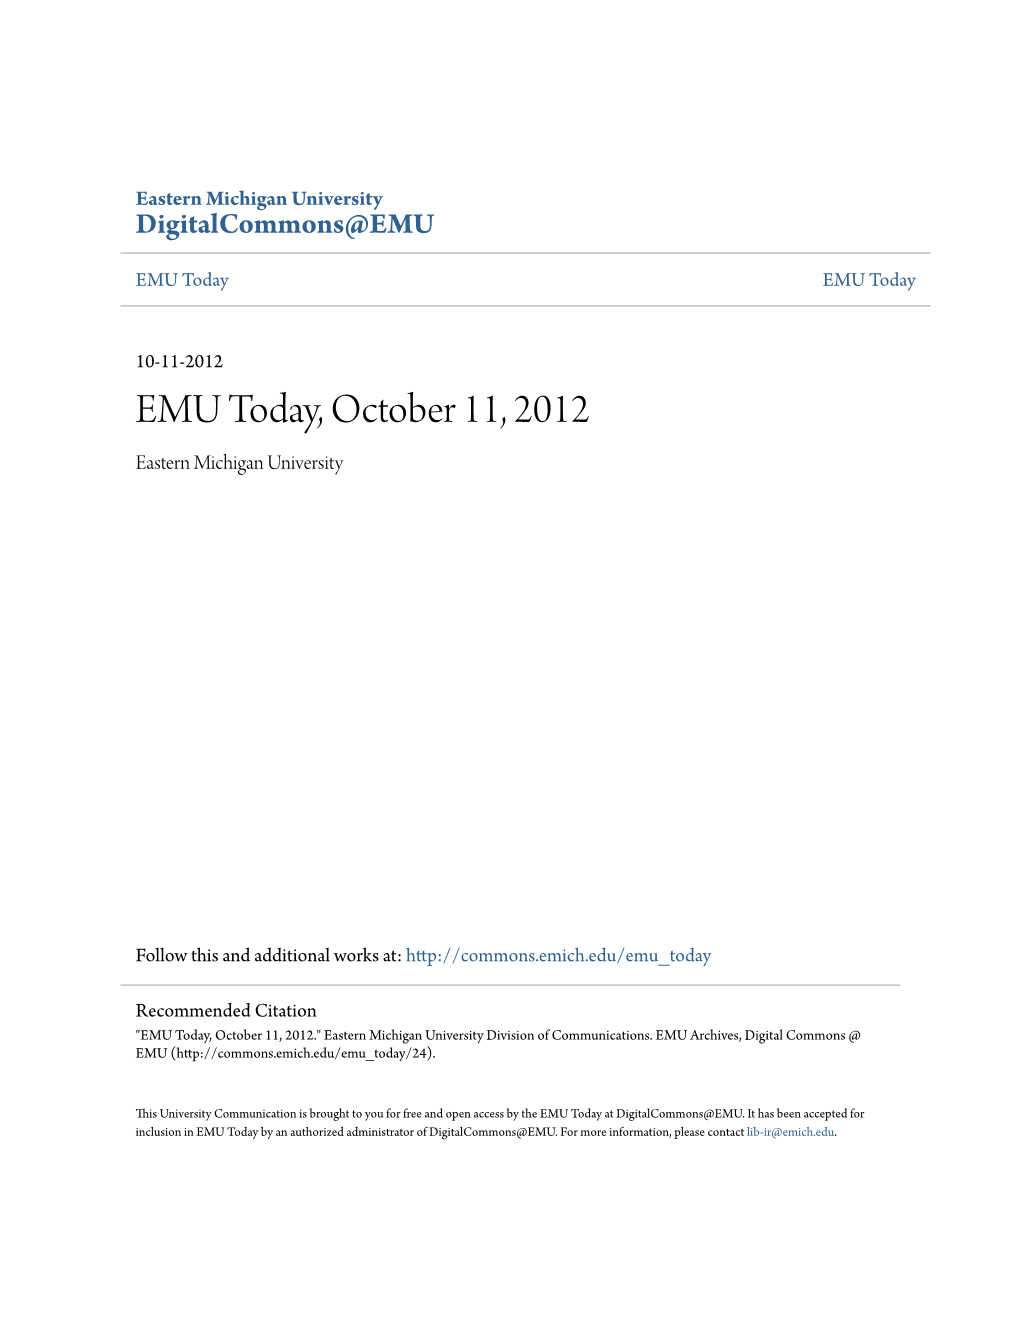 EMU Today, October 11, 2012 Eastern Michigan University